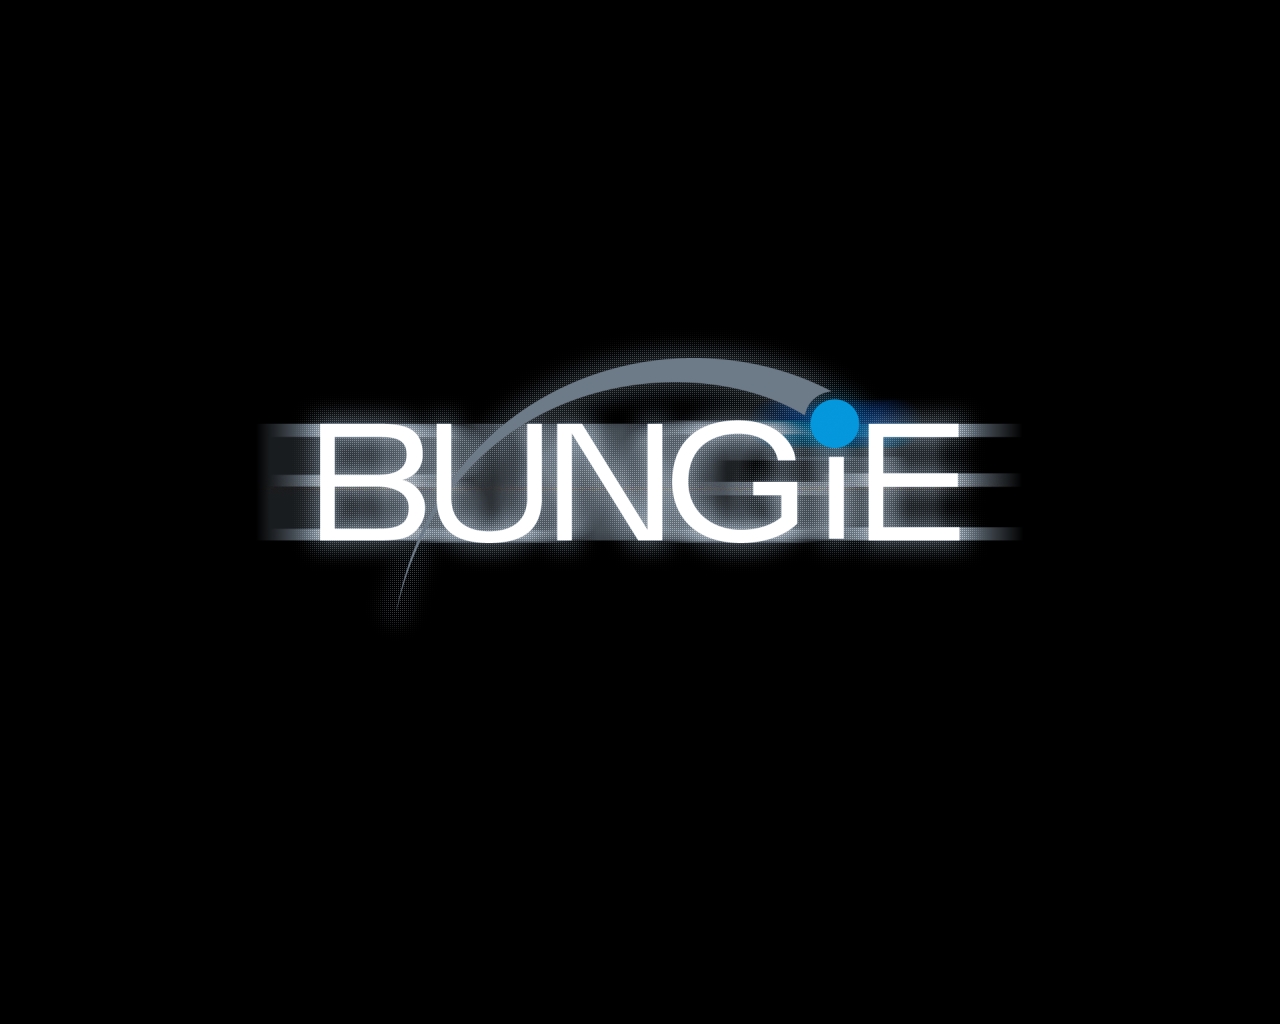 Bungie's 'Destiny' project detailed